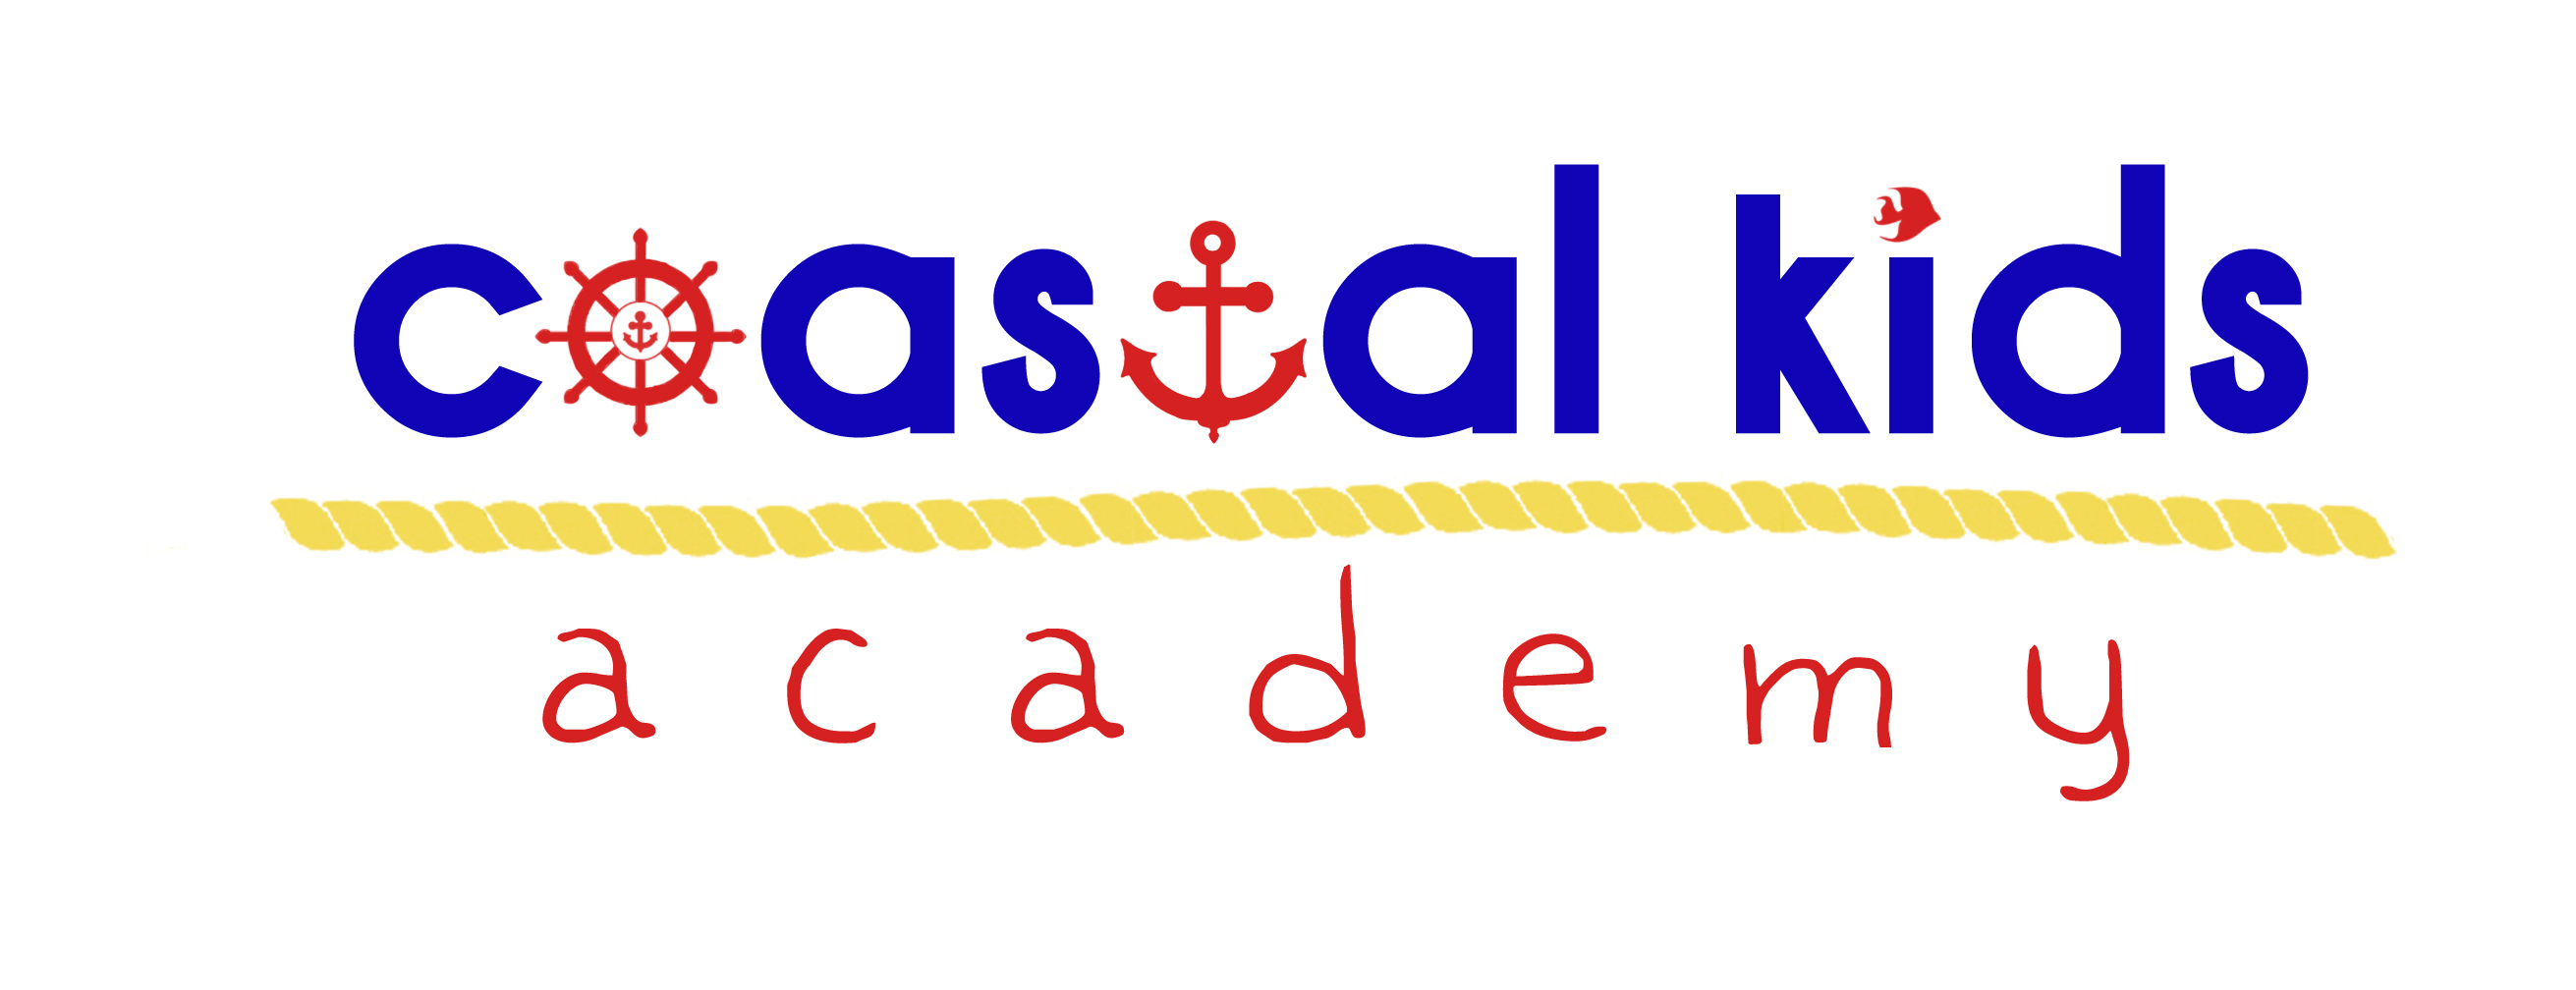 Coastal Kids Academy